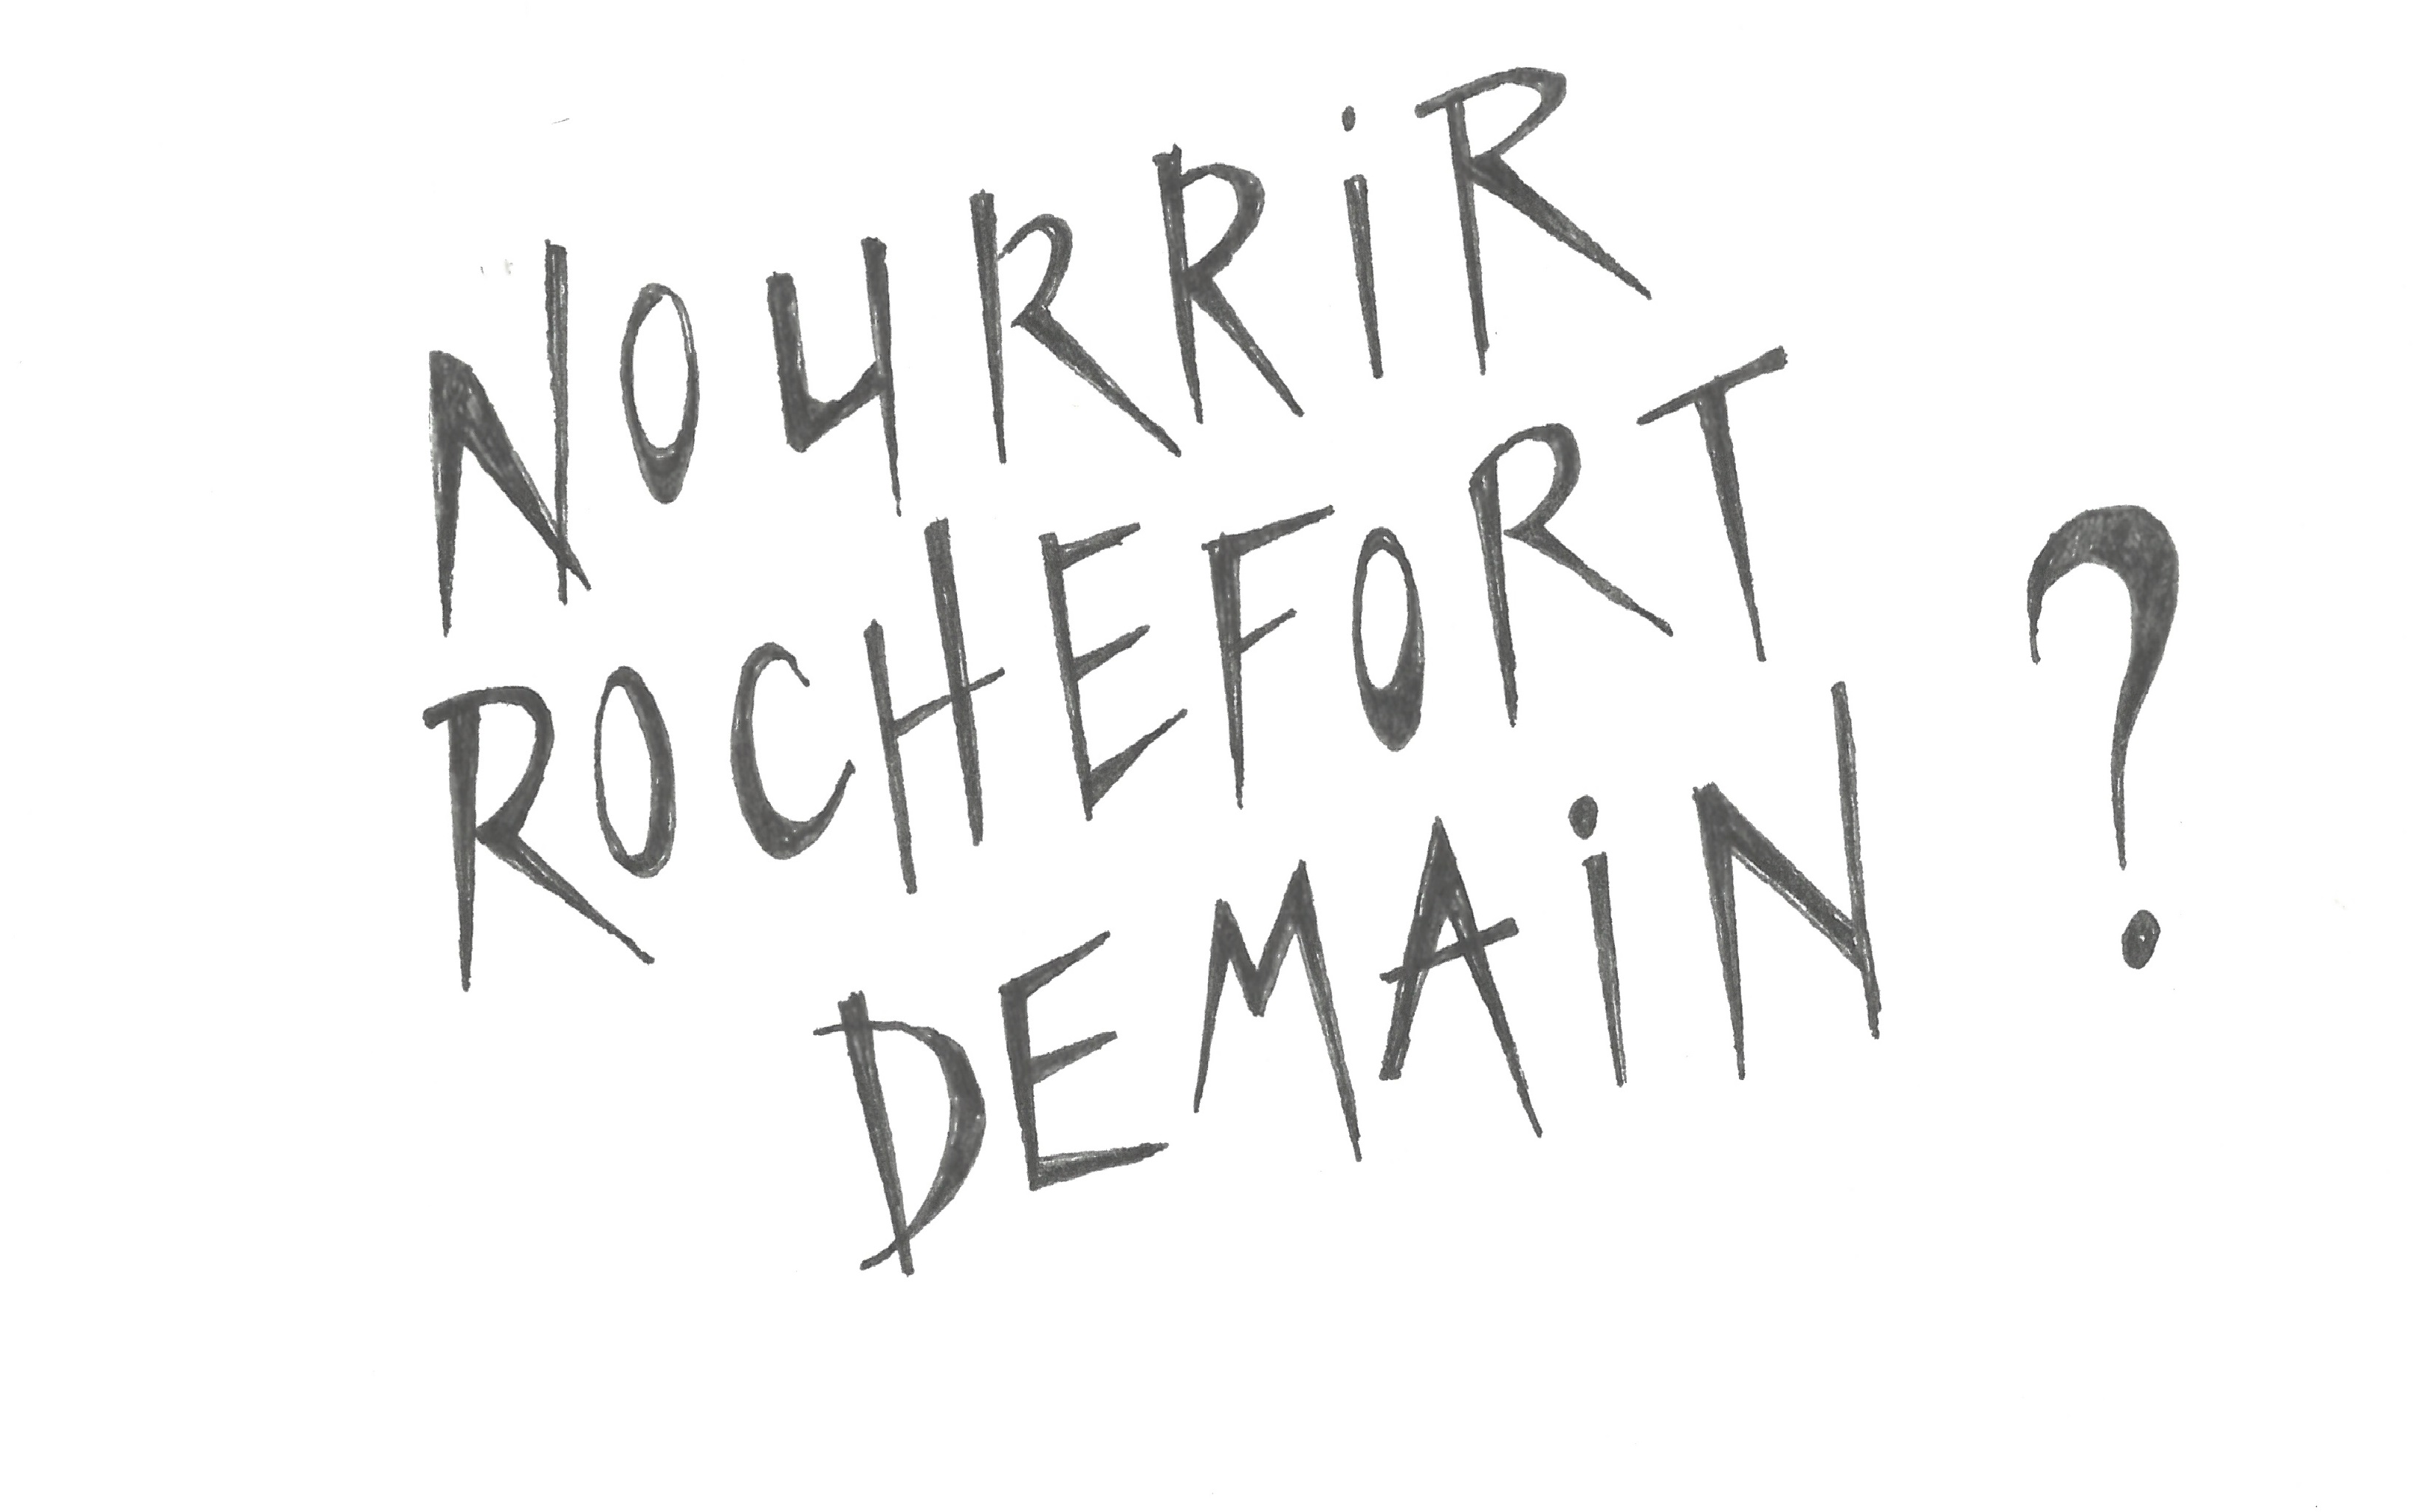 image nourrir_rochefort_texte_31.jpg (0.4MB)
Lien vers: https://rochefortentransition.org/NourriR